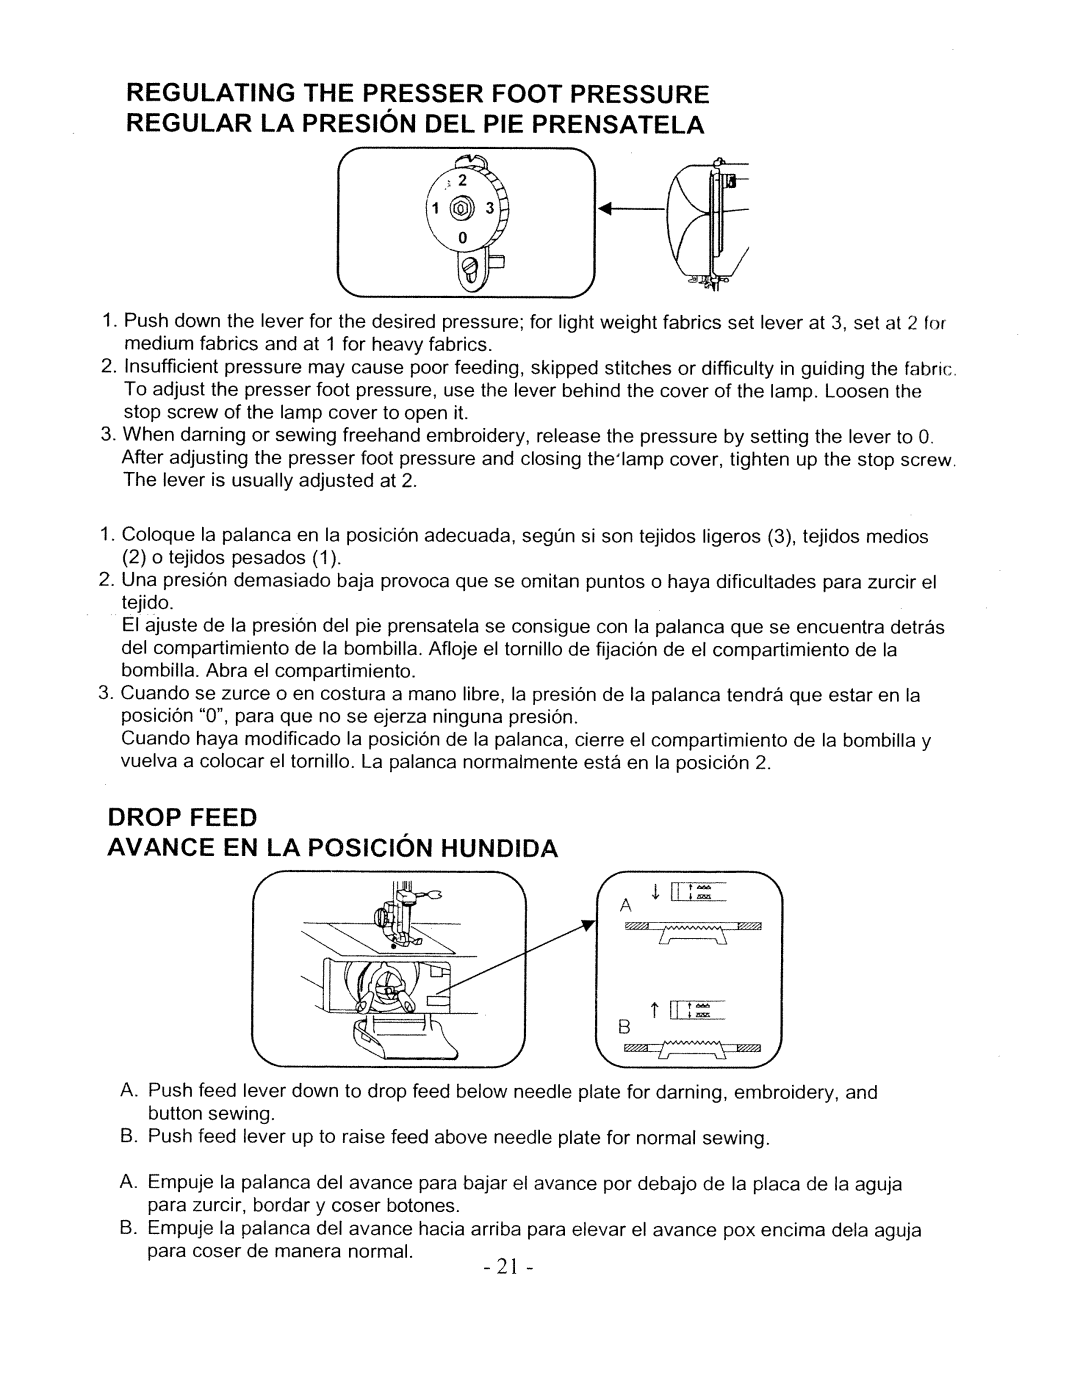 White W480 manual Regulating the Presser Foot Pressure, Regular LA Presion DEL PIE Prensatela, Drop Feed 